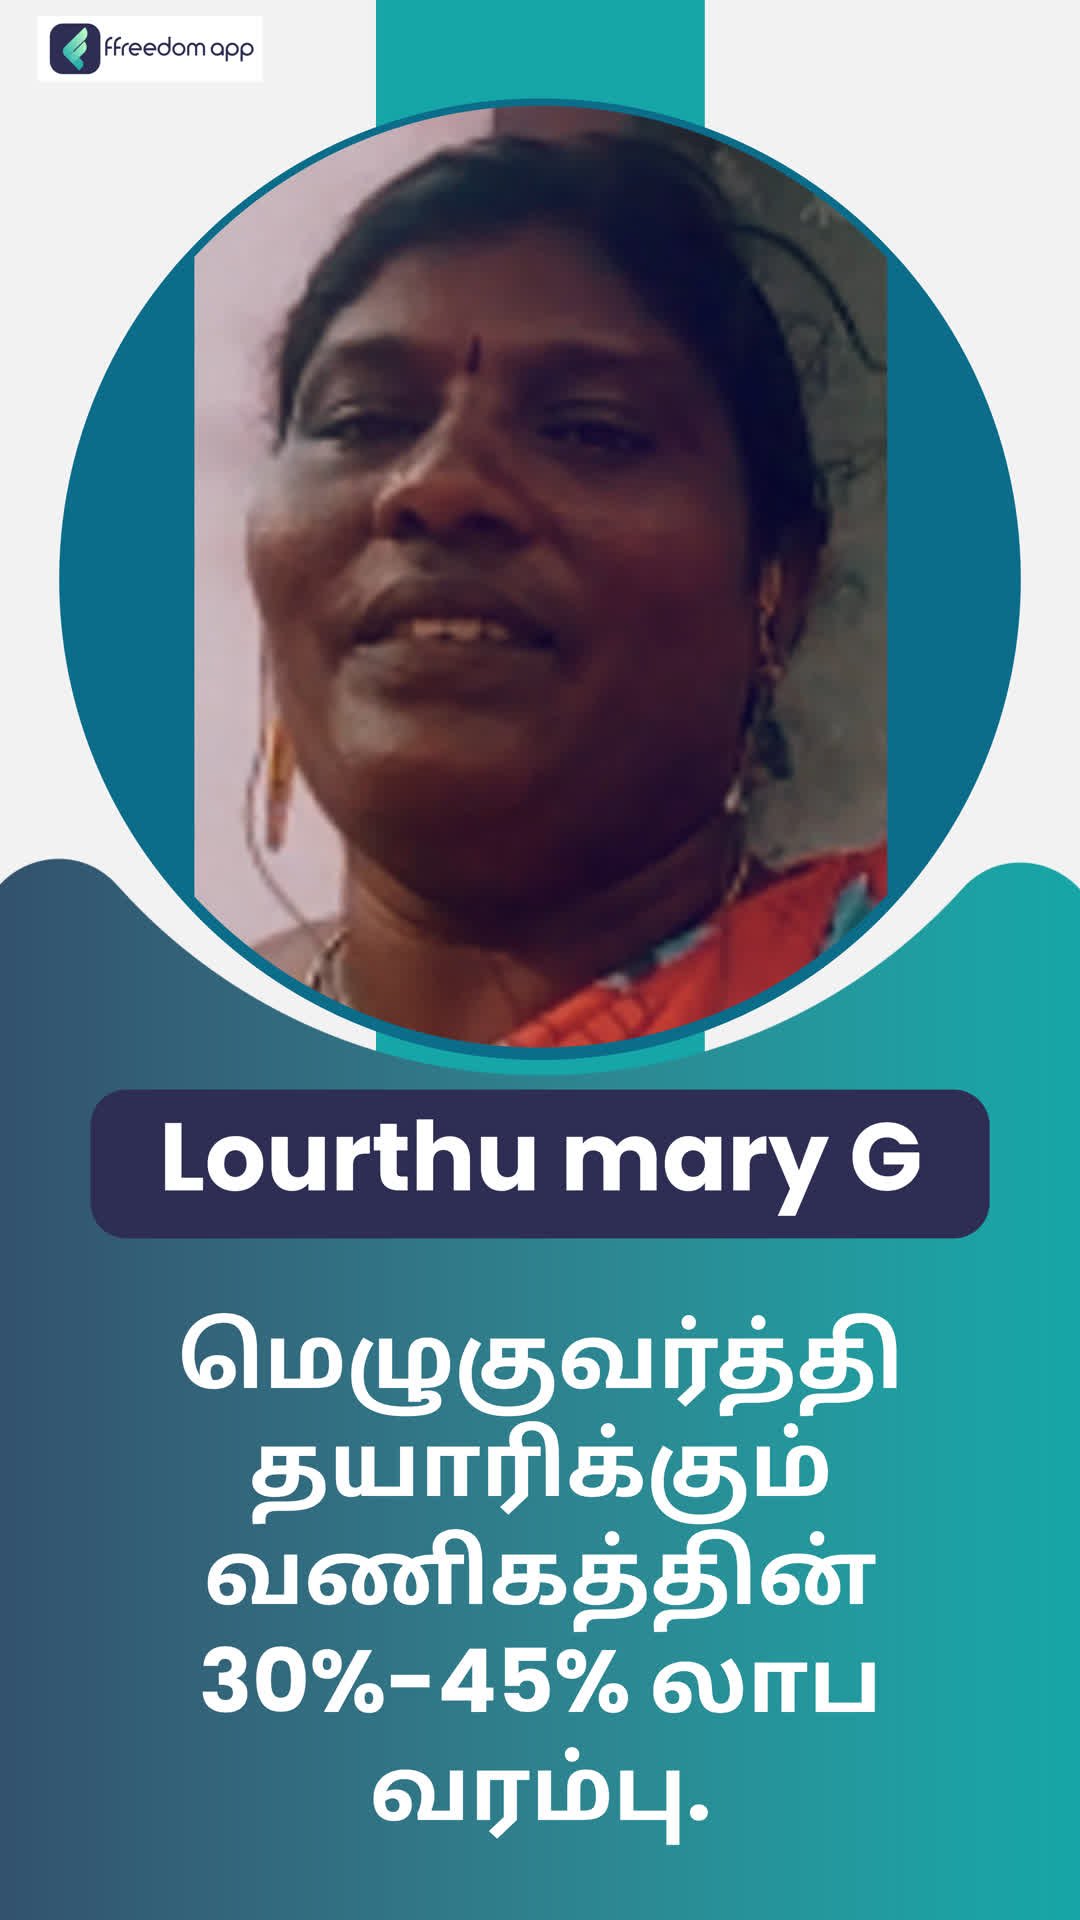 G. Lourthu mary's Honest Review of ffreedom app - Tirunelveli ,Tamil Nadu